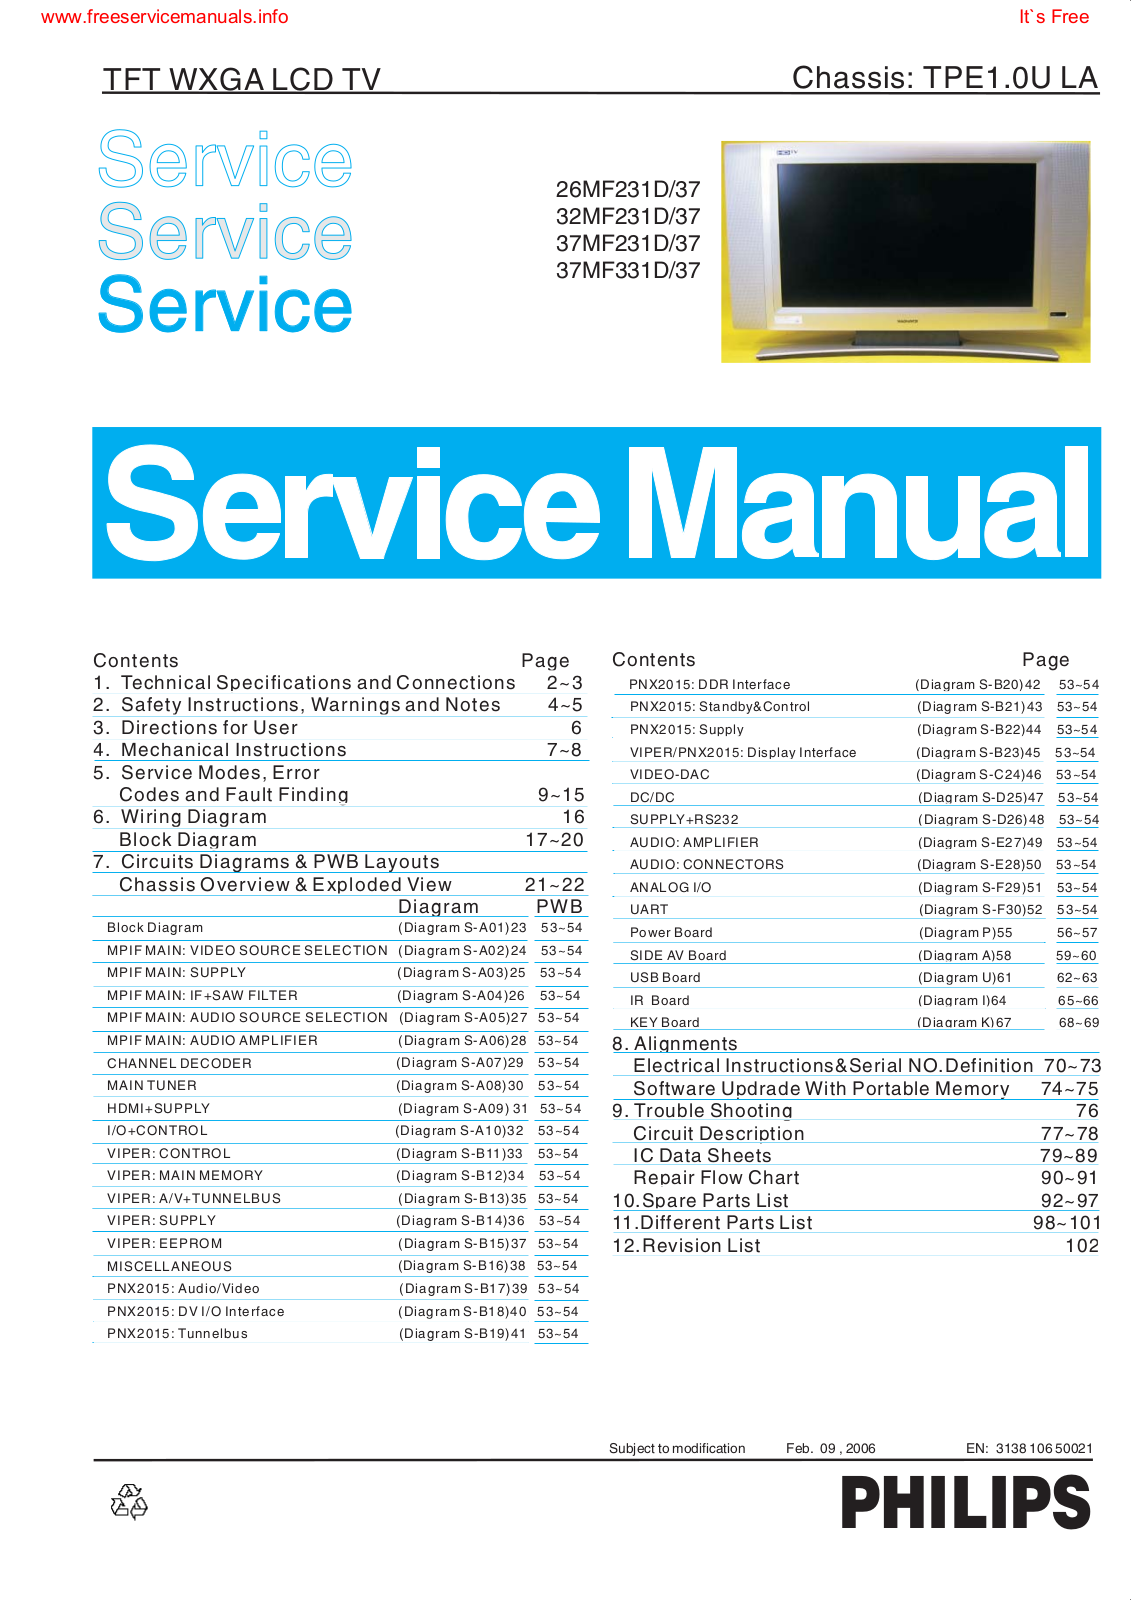 Philips 26MF231D-37, 32MF231D-37, 37MF231D-37, 37MF331D-37 Service Manual